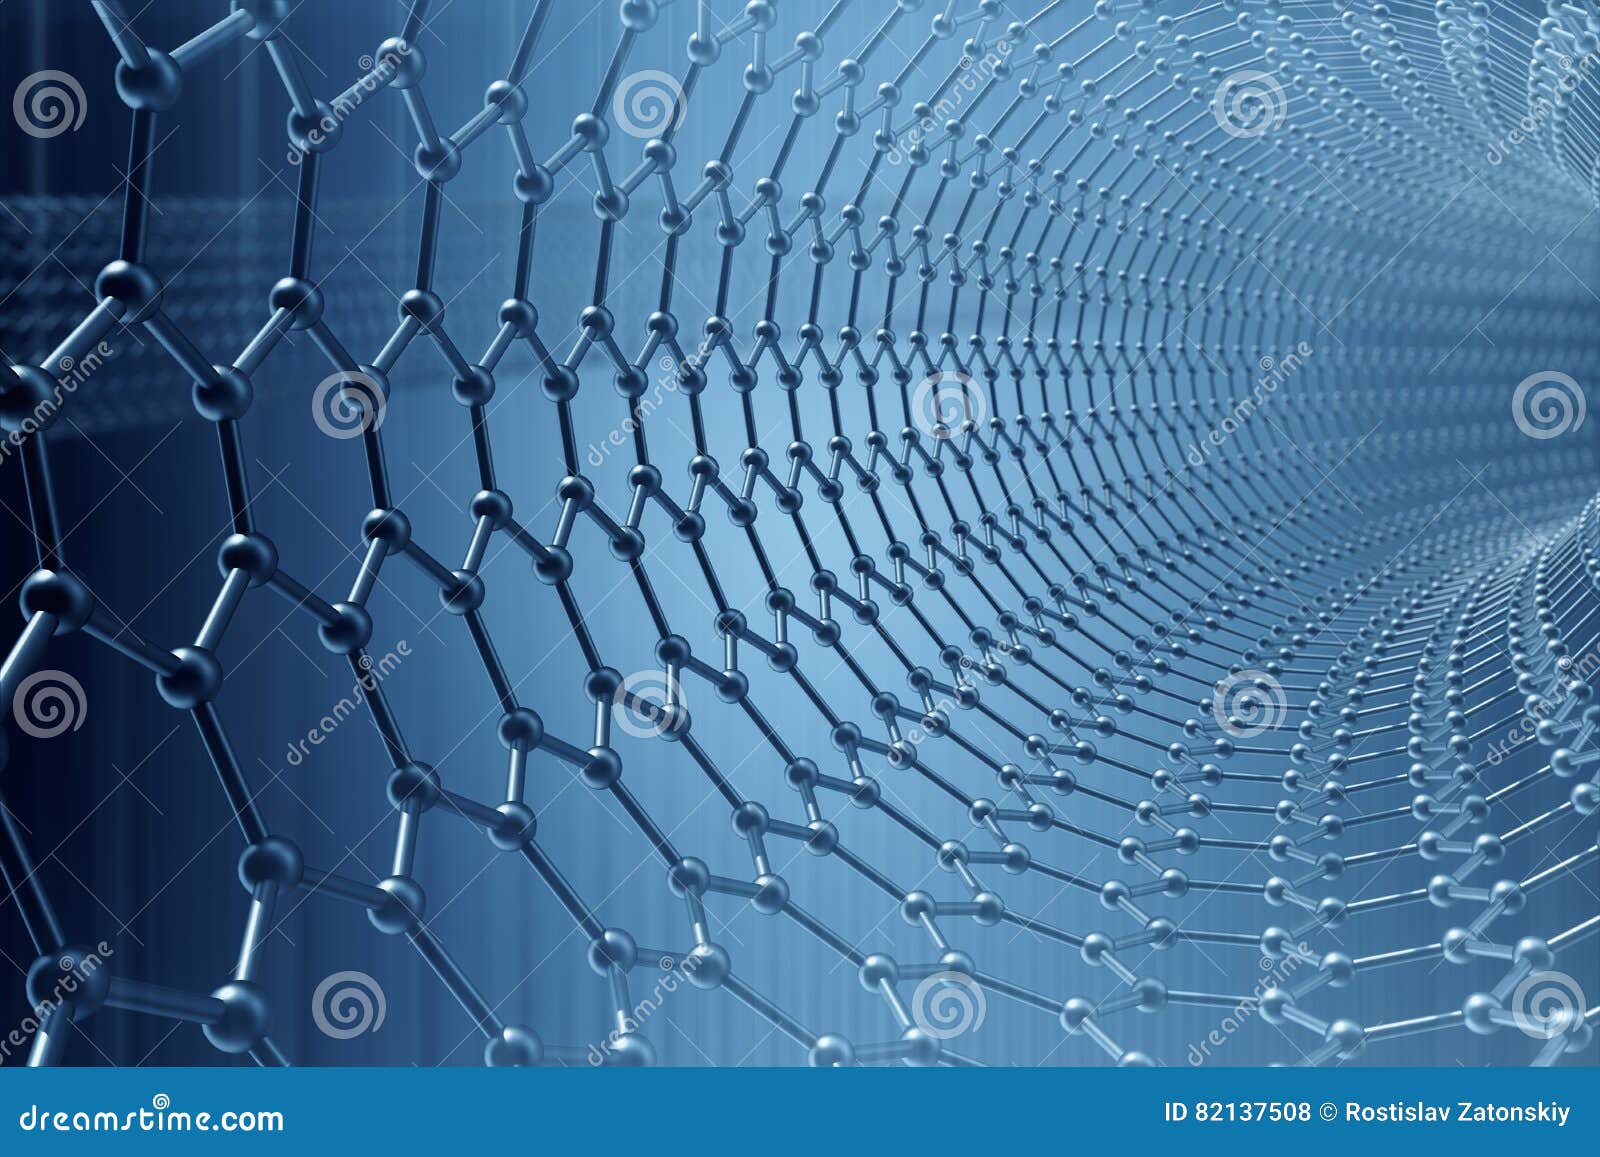 rendering abstract nanotechnology hexagonal geometric form close-up, concept graphene atomic structure, molecular